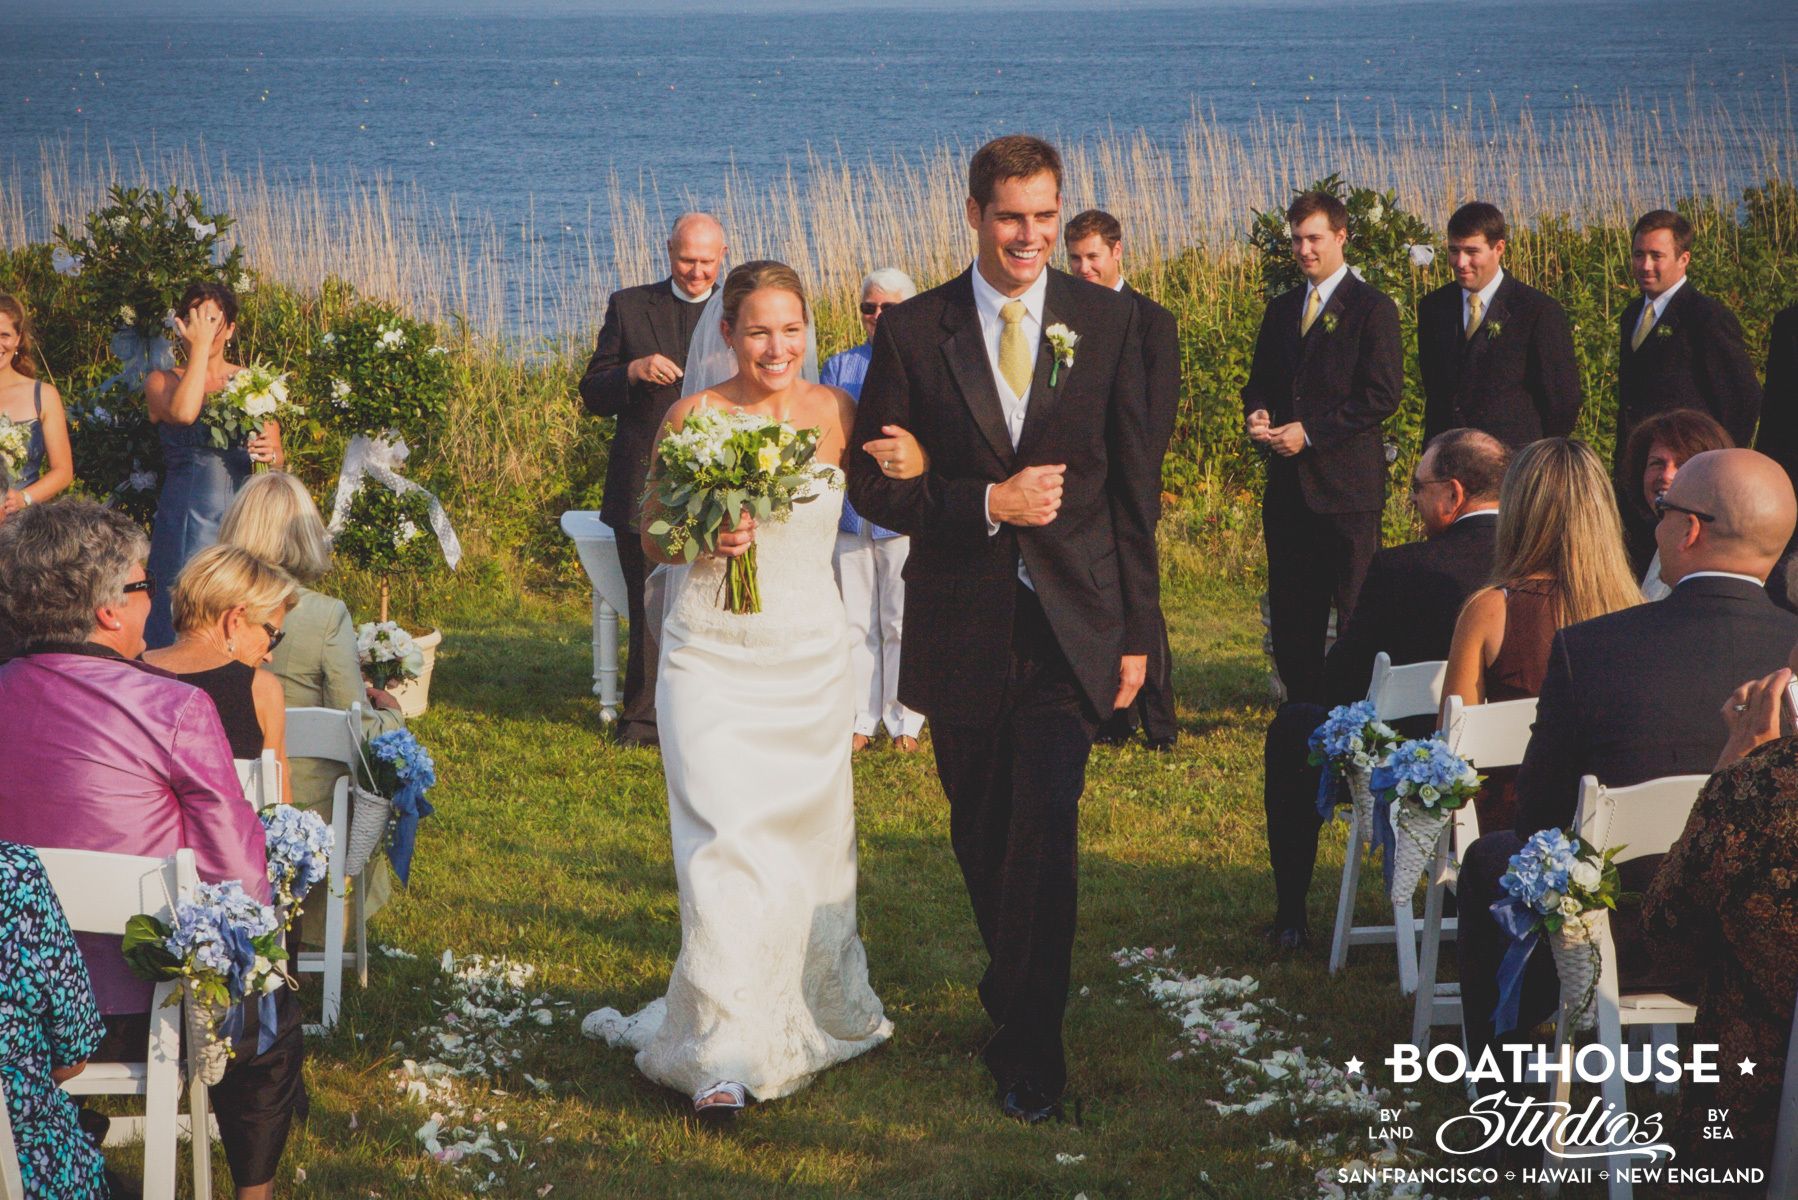 Saltwater Farm Wedding, St. George, Maine.